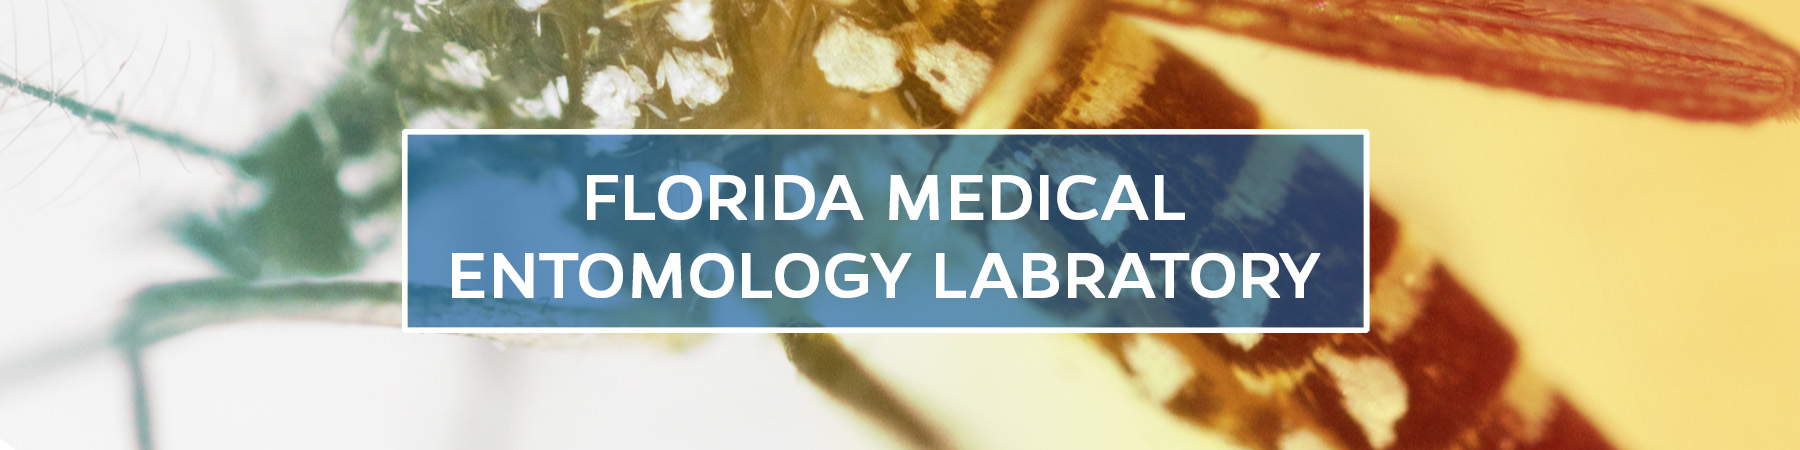 Florida Medical Entomology Laboratory